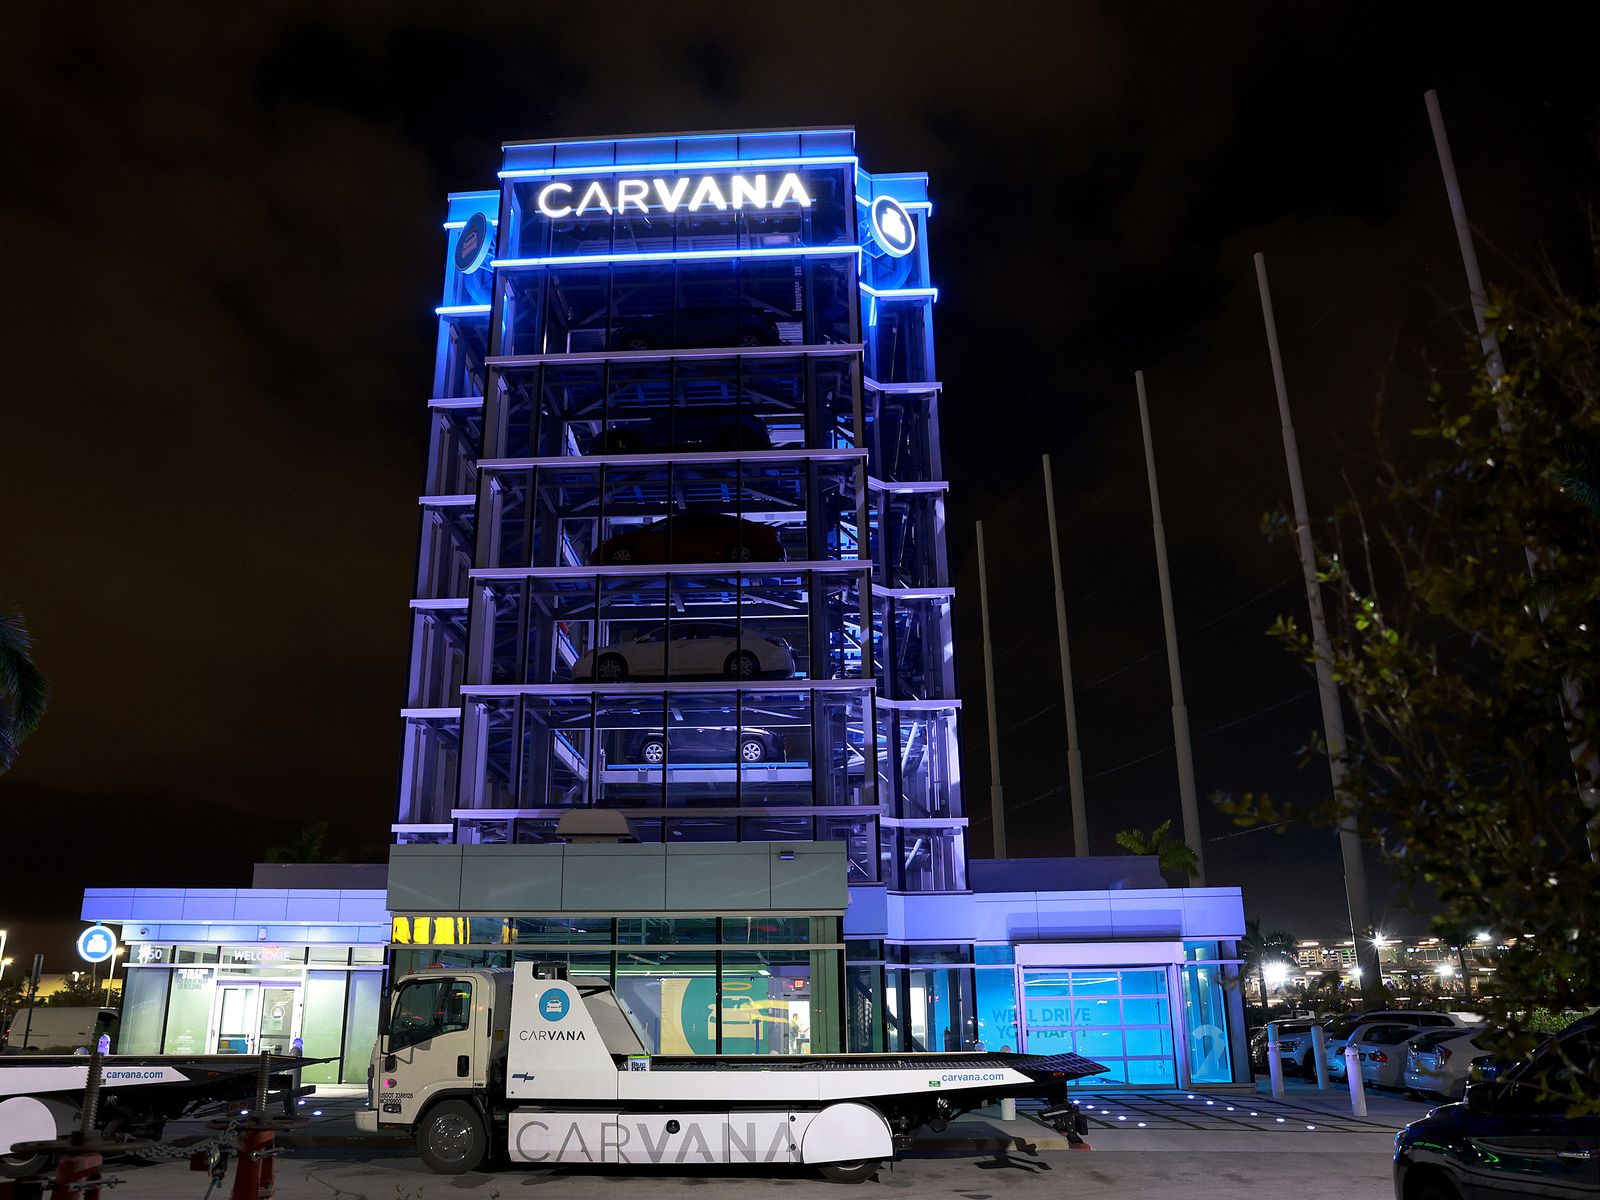 How Does Carvana Work?